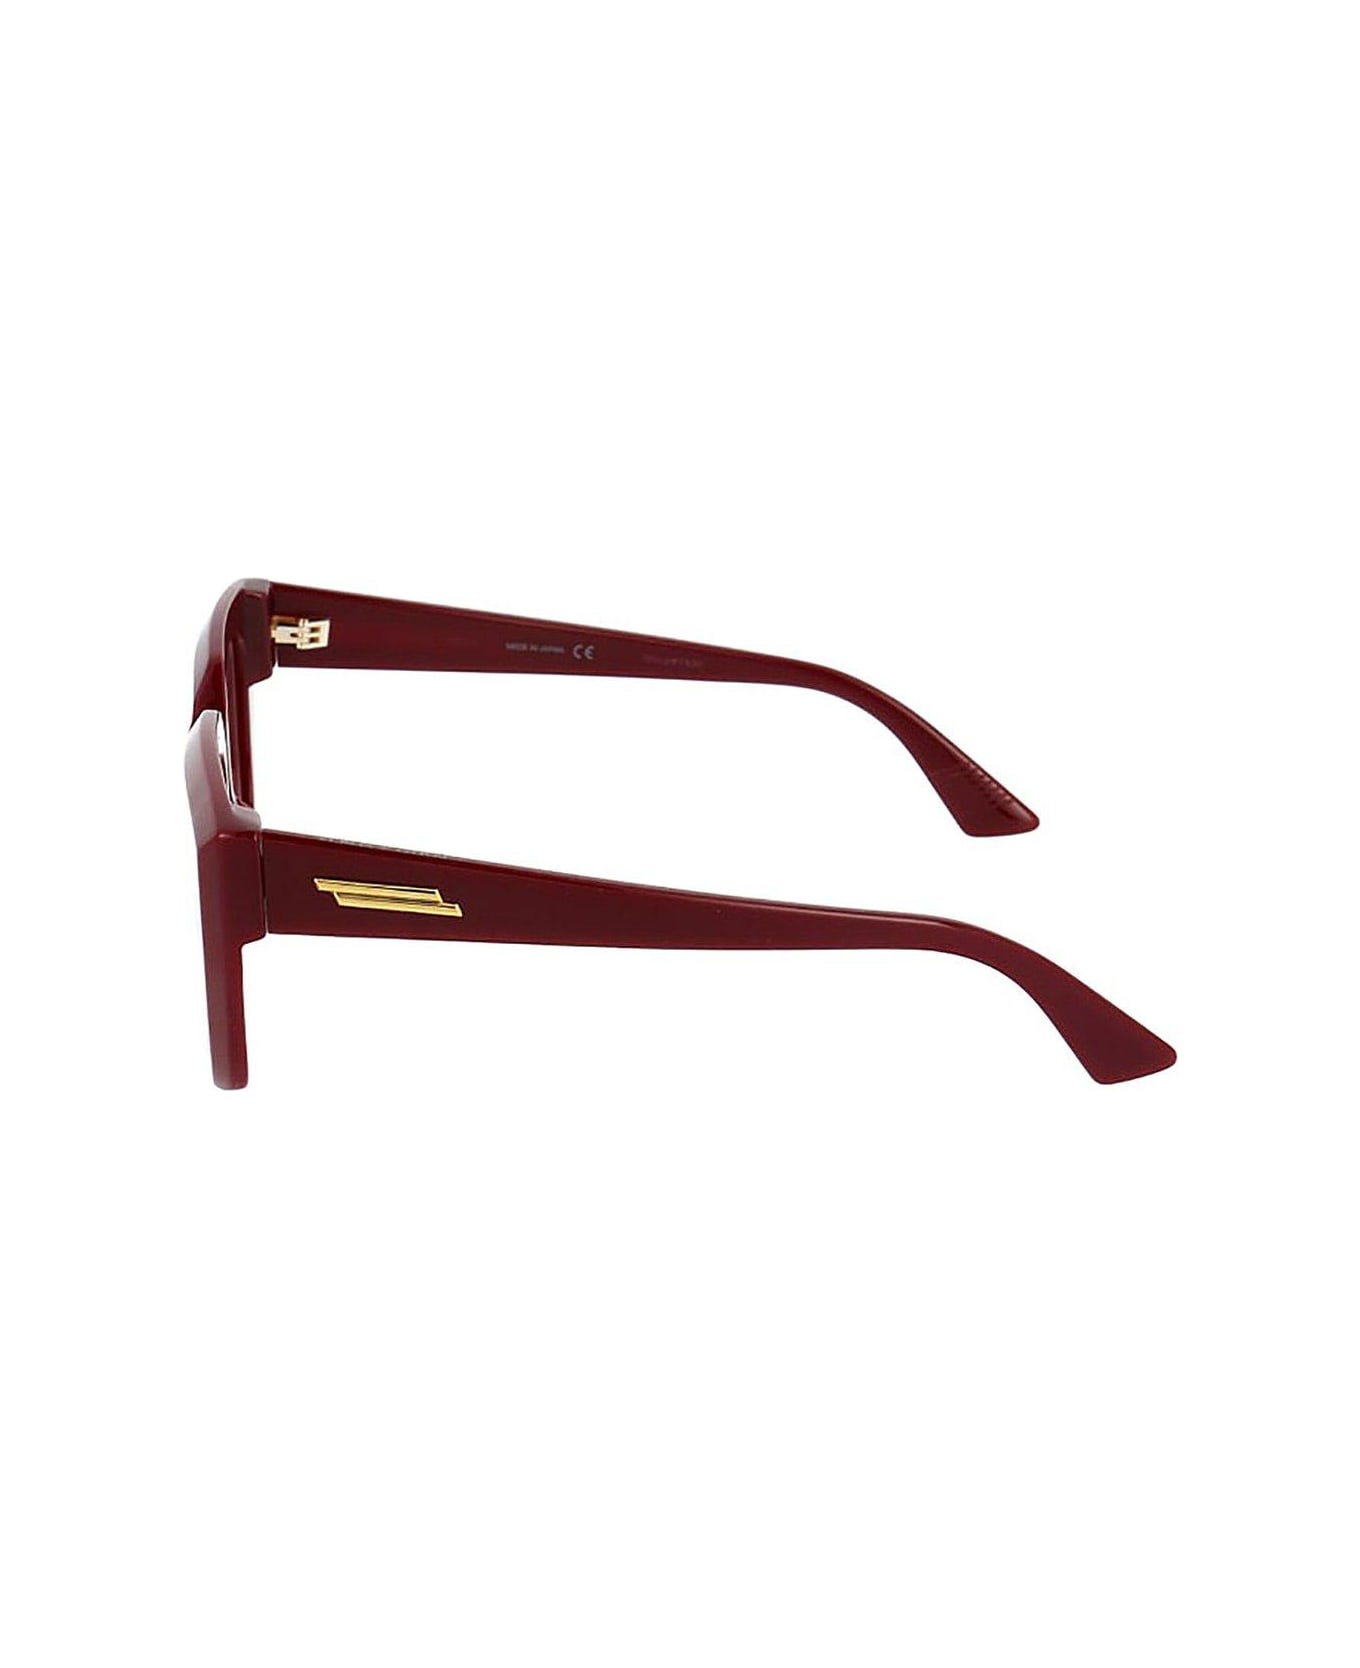 Bottega Veneta Eyewear Square Frame Glasses - 003 burgundy burgundy tra